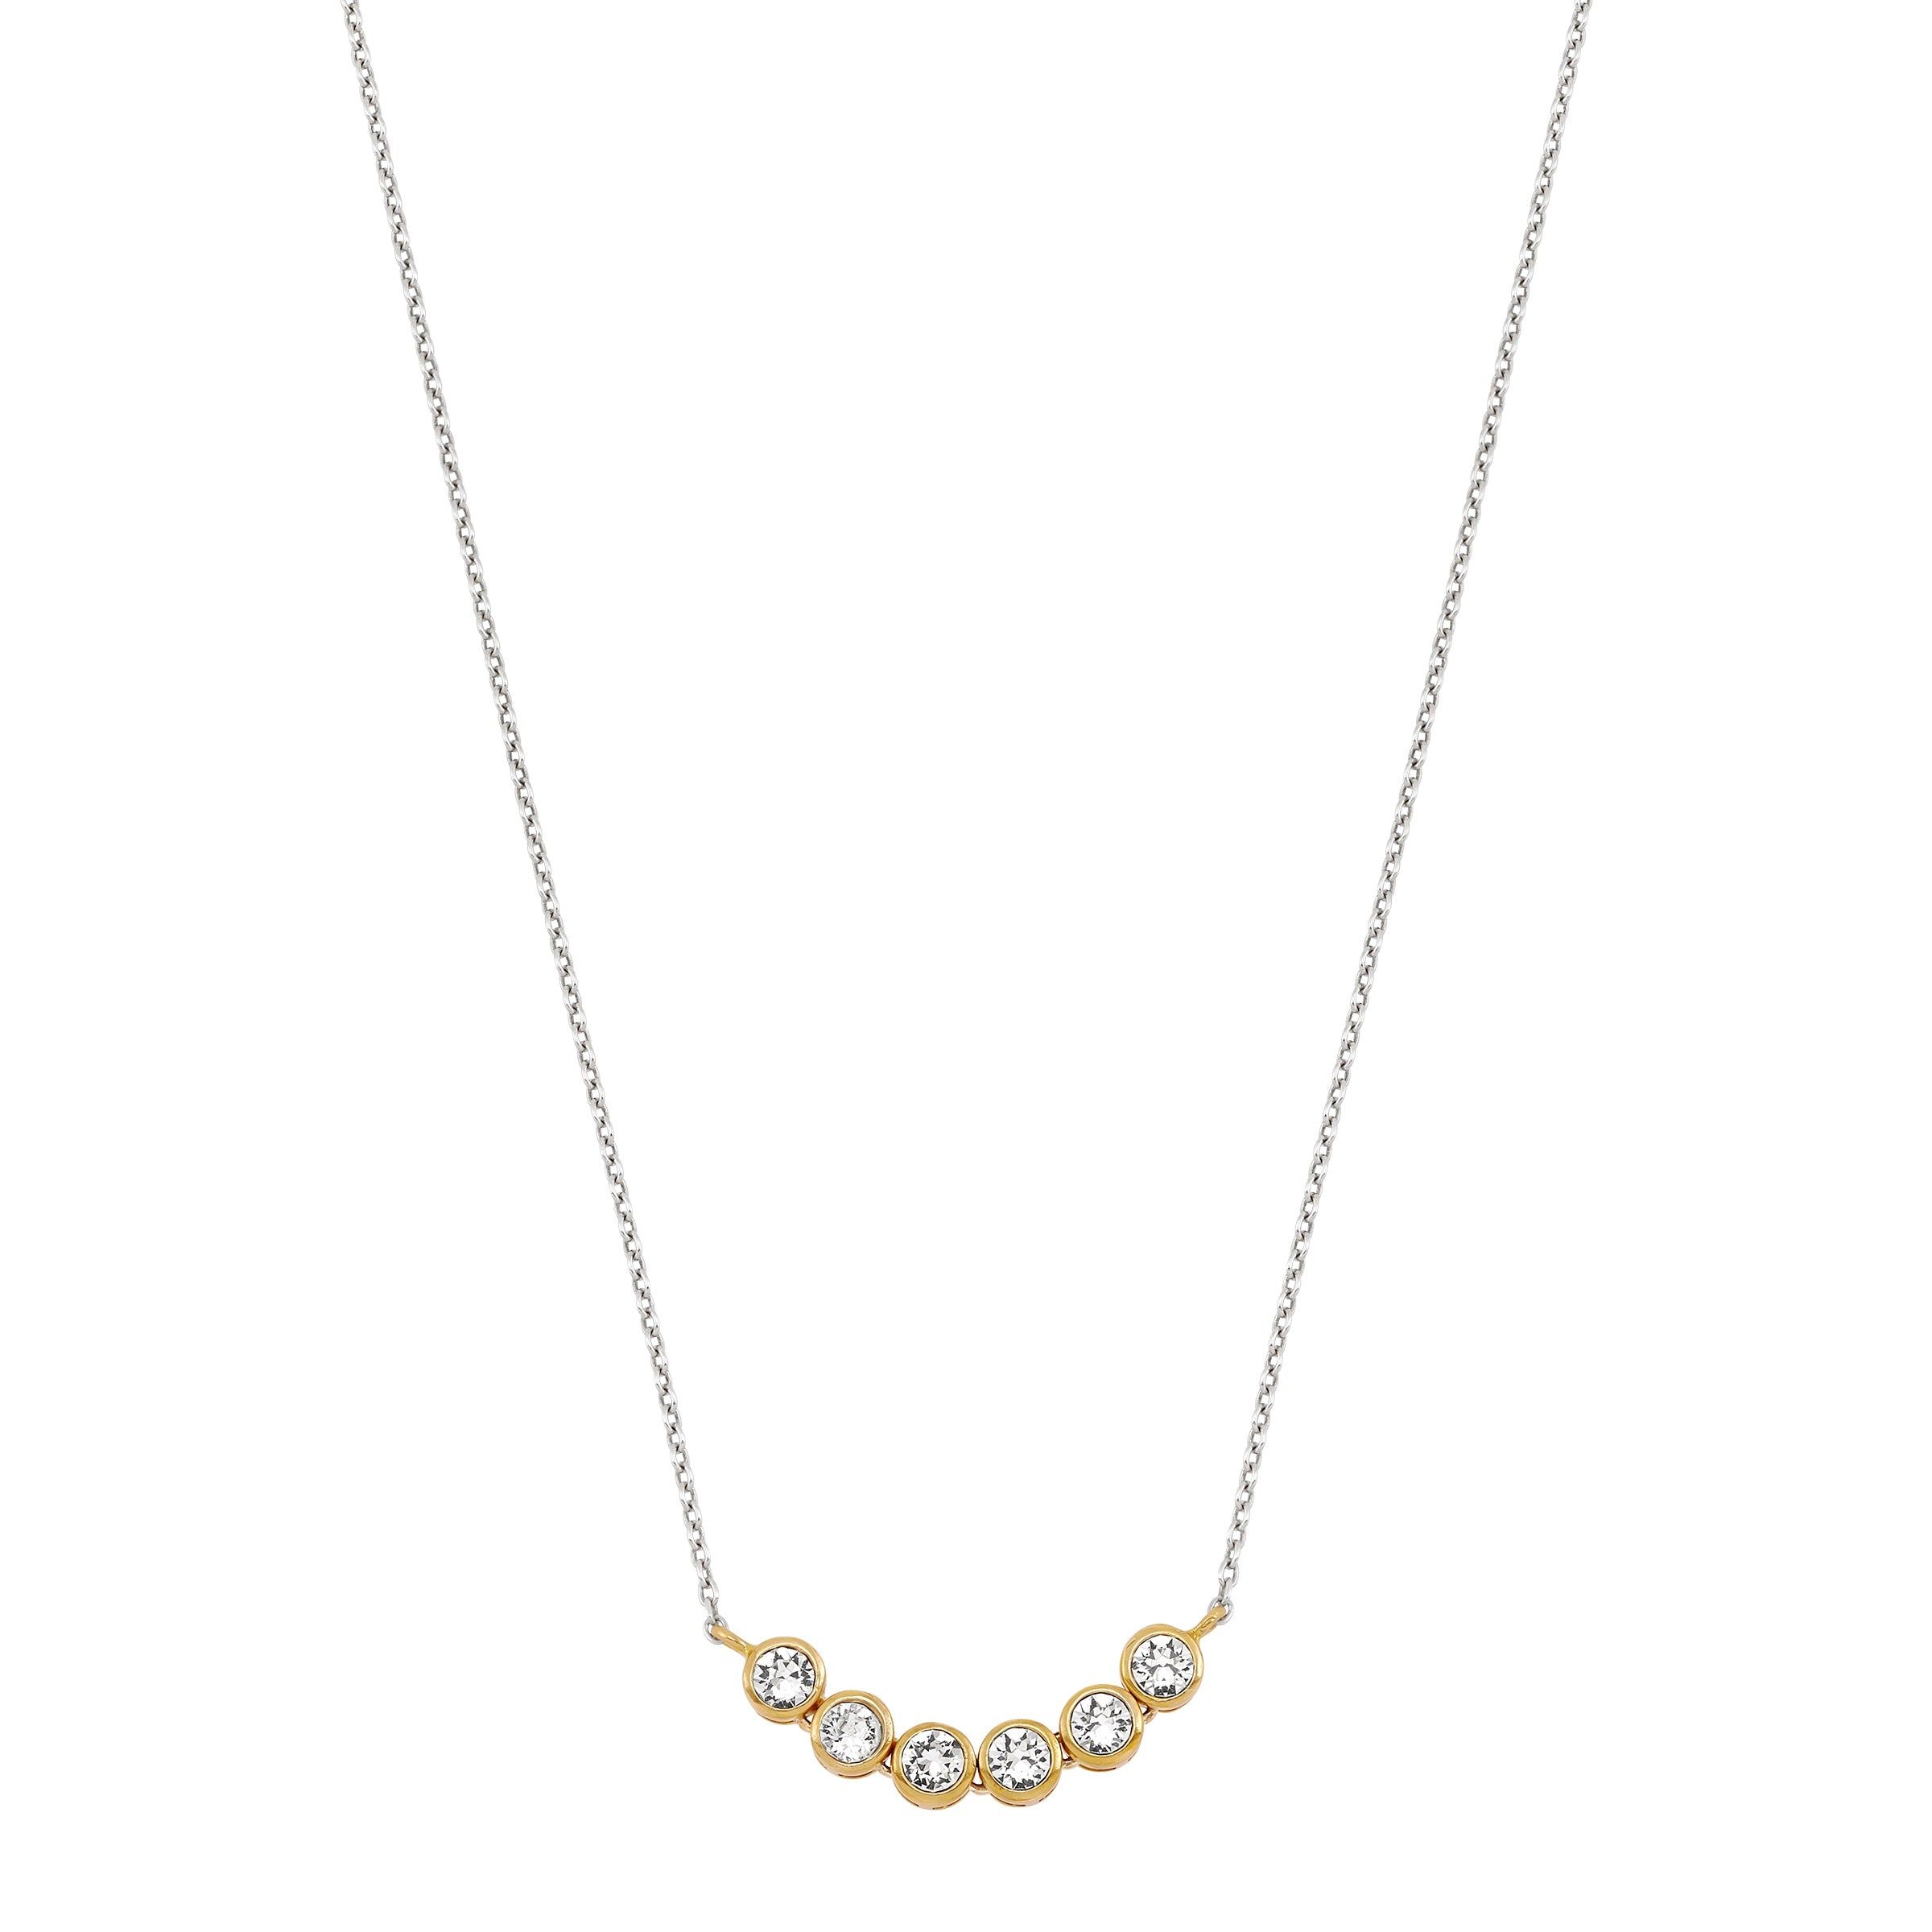 Silpada - Cinco Crystal Sterling Silver & Brass Necklace - Arktana - 